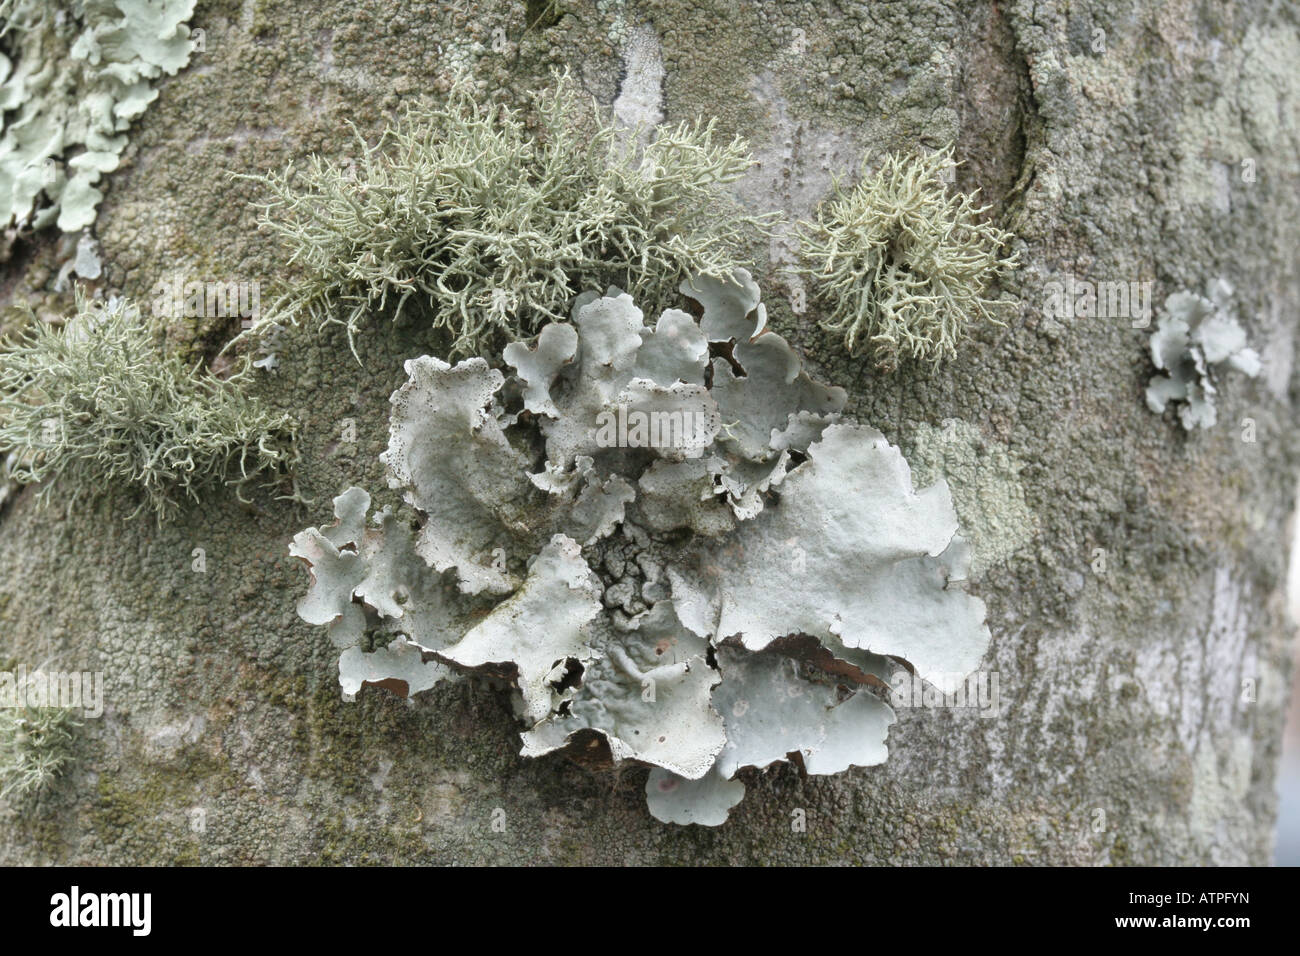 Fruticose (Cladonia sp.), foliose (Parmotrema sp.), and crustose (unidentified) lichens. Stock Photo